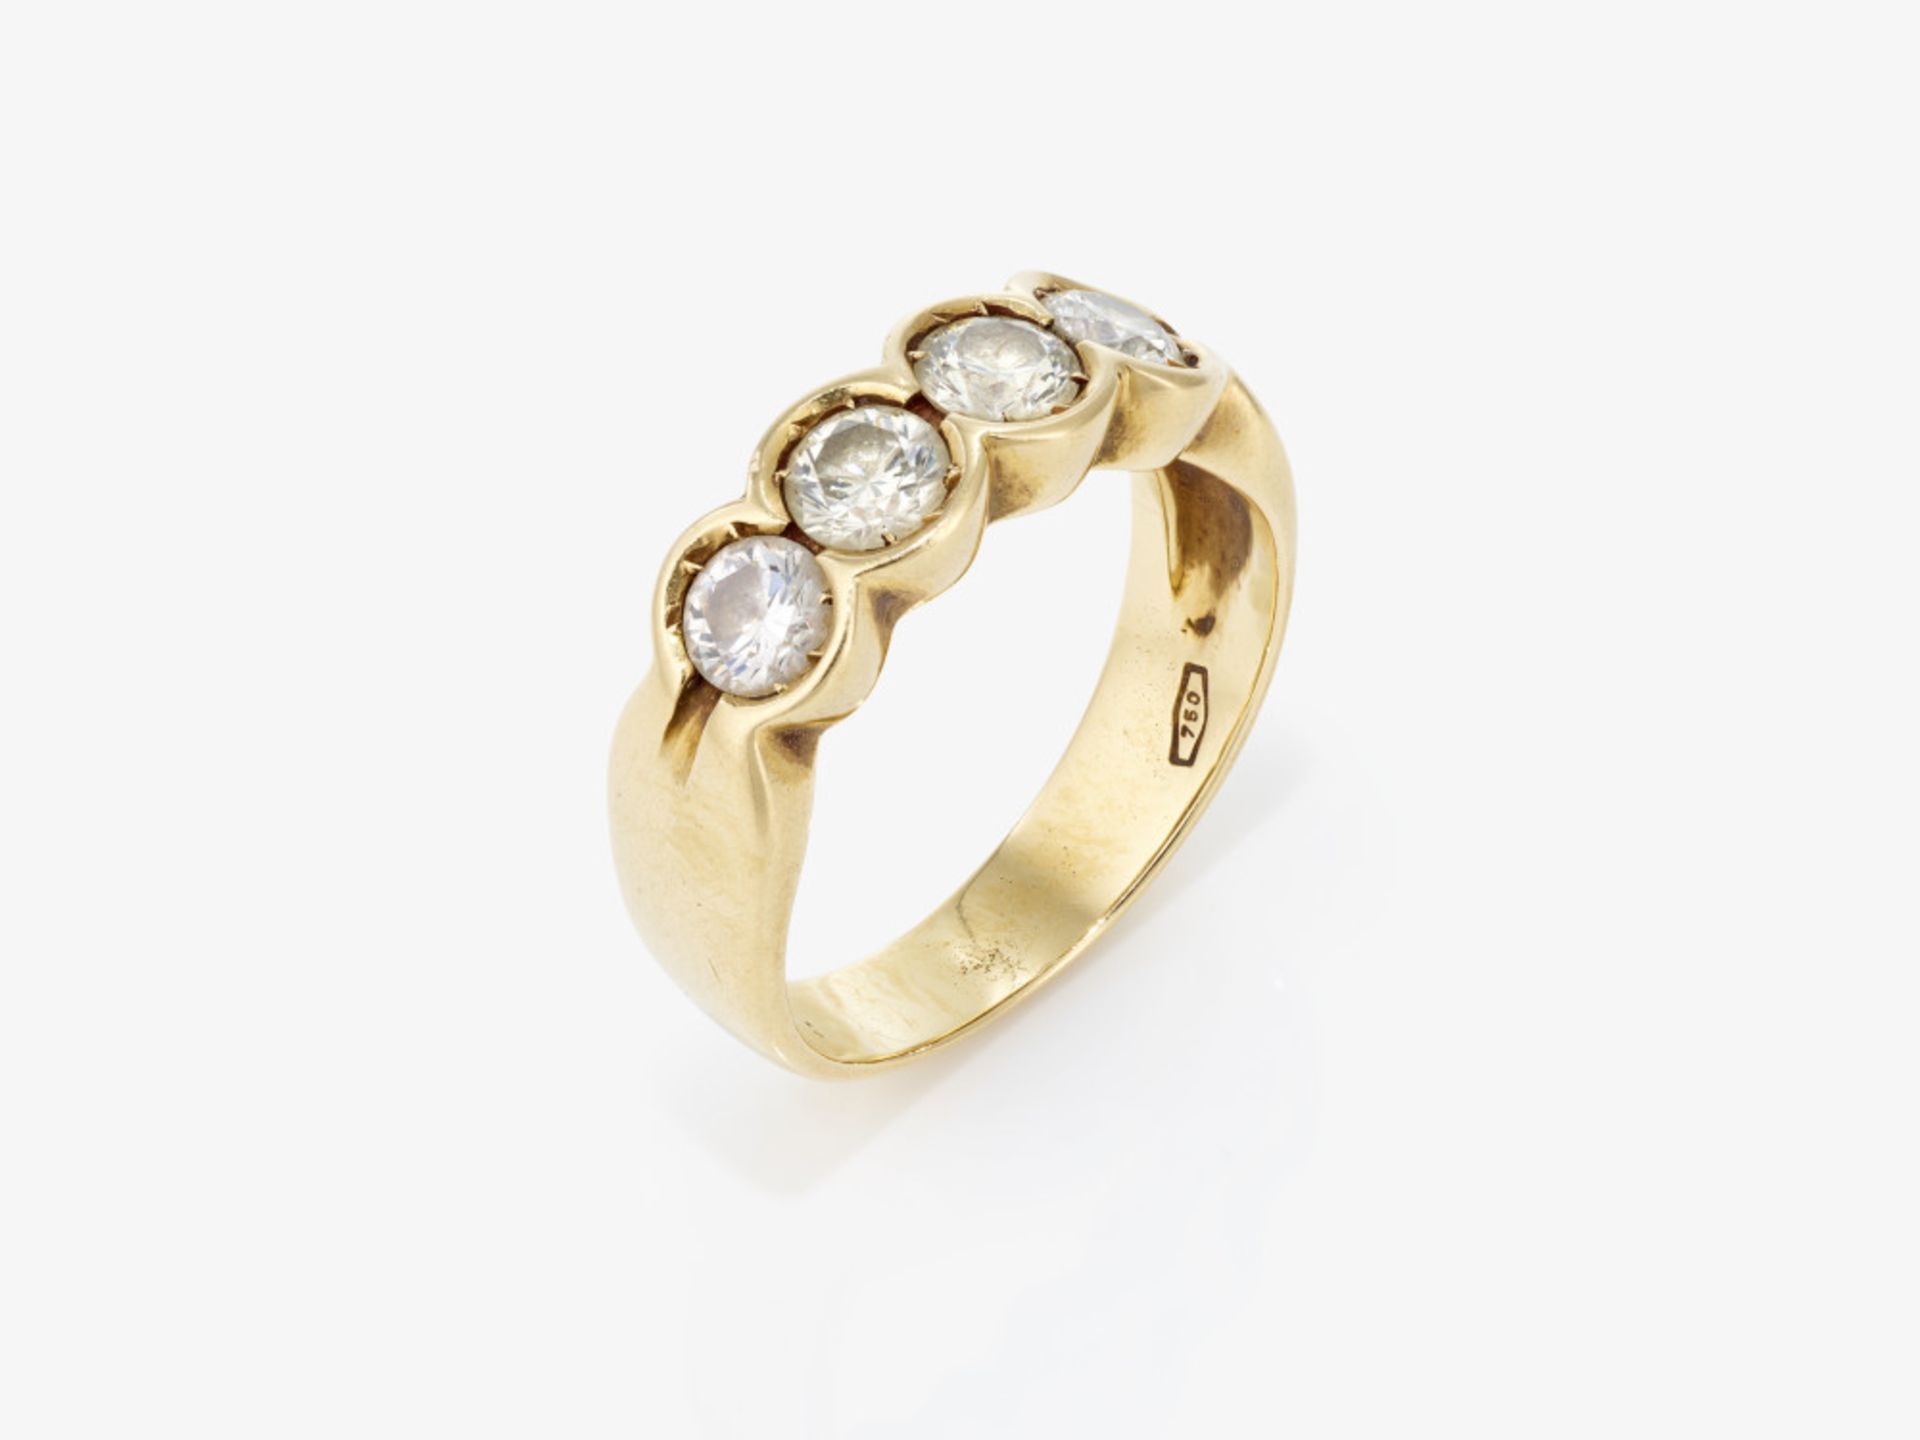 A Rivière ring with four brilliant-cut diamonds